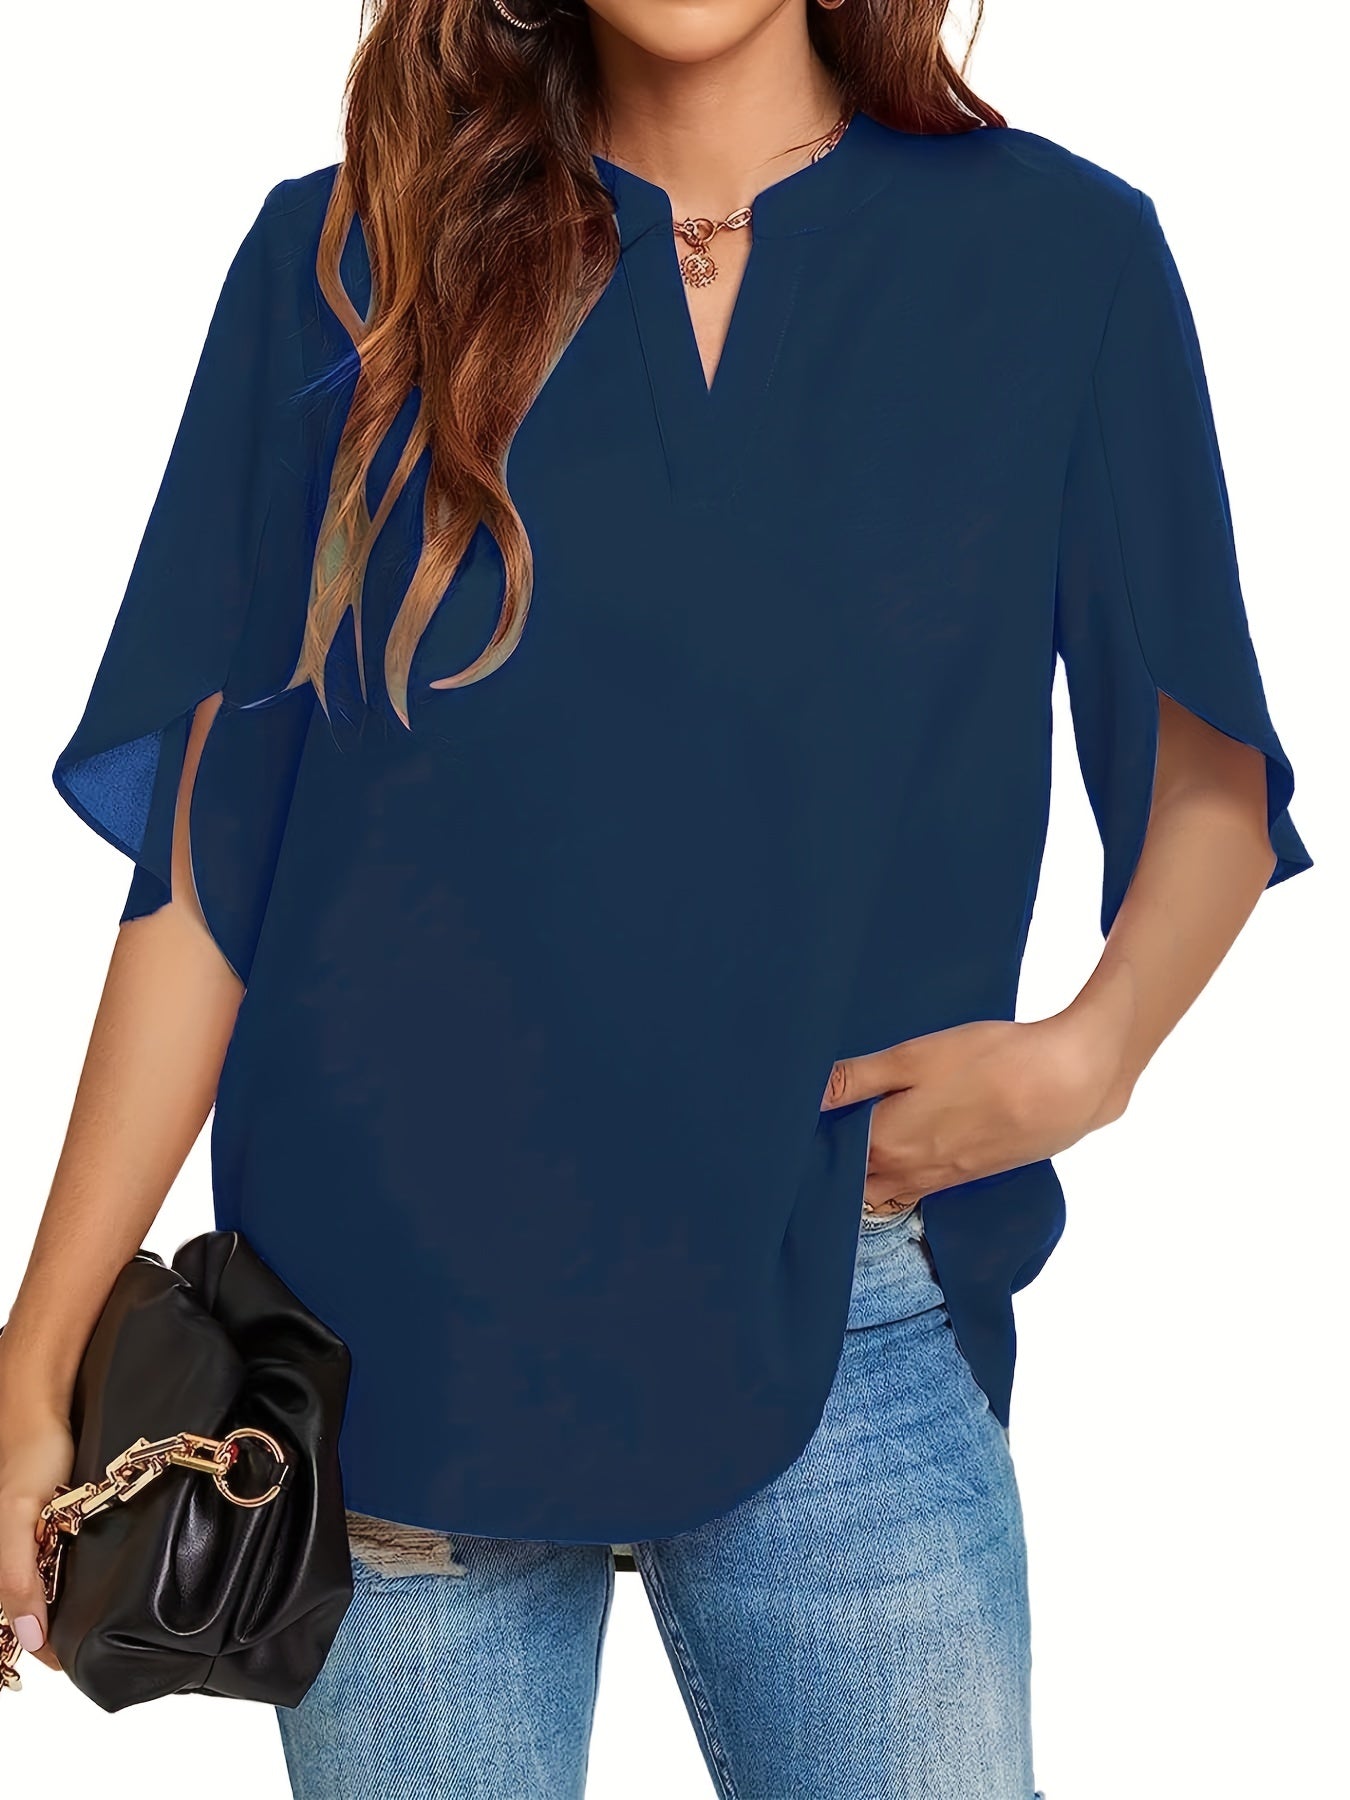 Vzyzv Solid Simple Blouse, Casual V Neck Split Sleeve Blouse For Spring & Fall, Women's Clothing